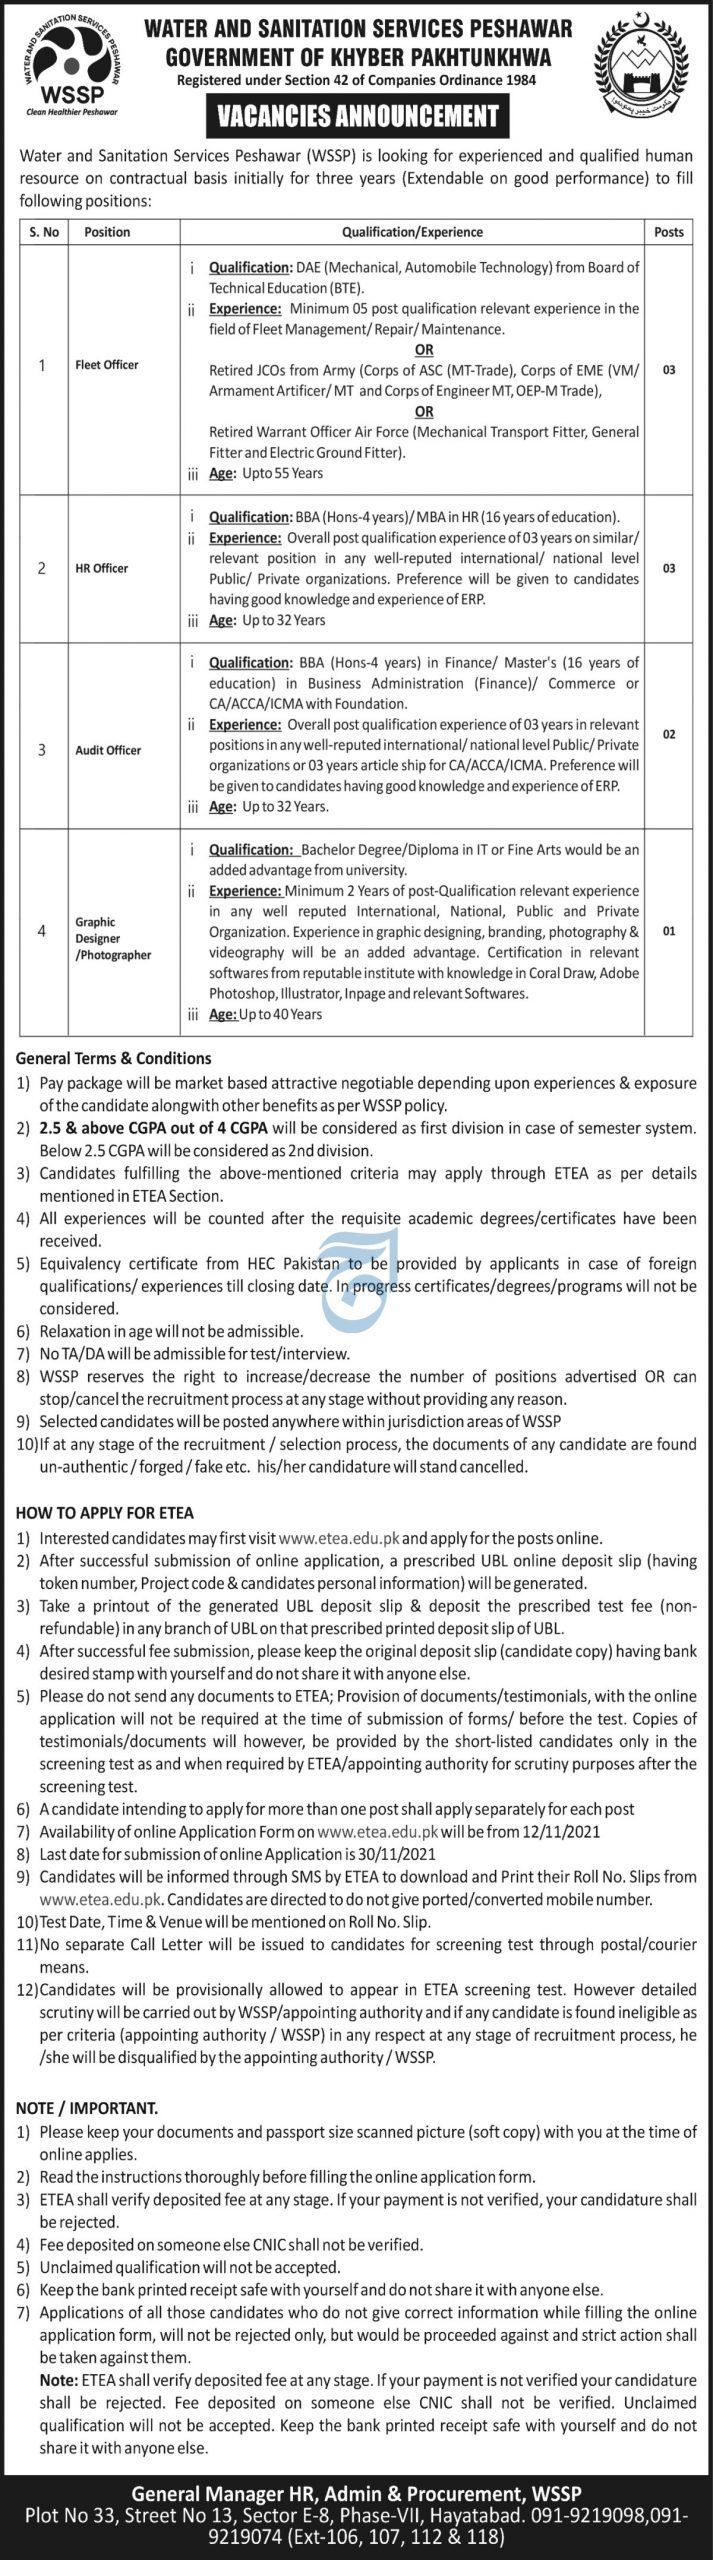 KPK WSSP Peshawar ETEA Jobs 2021 Application Form